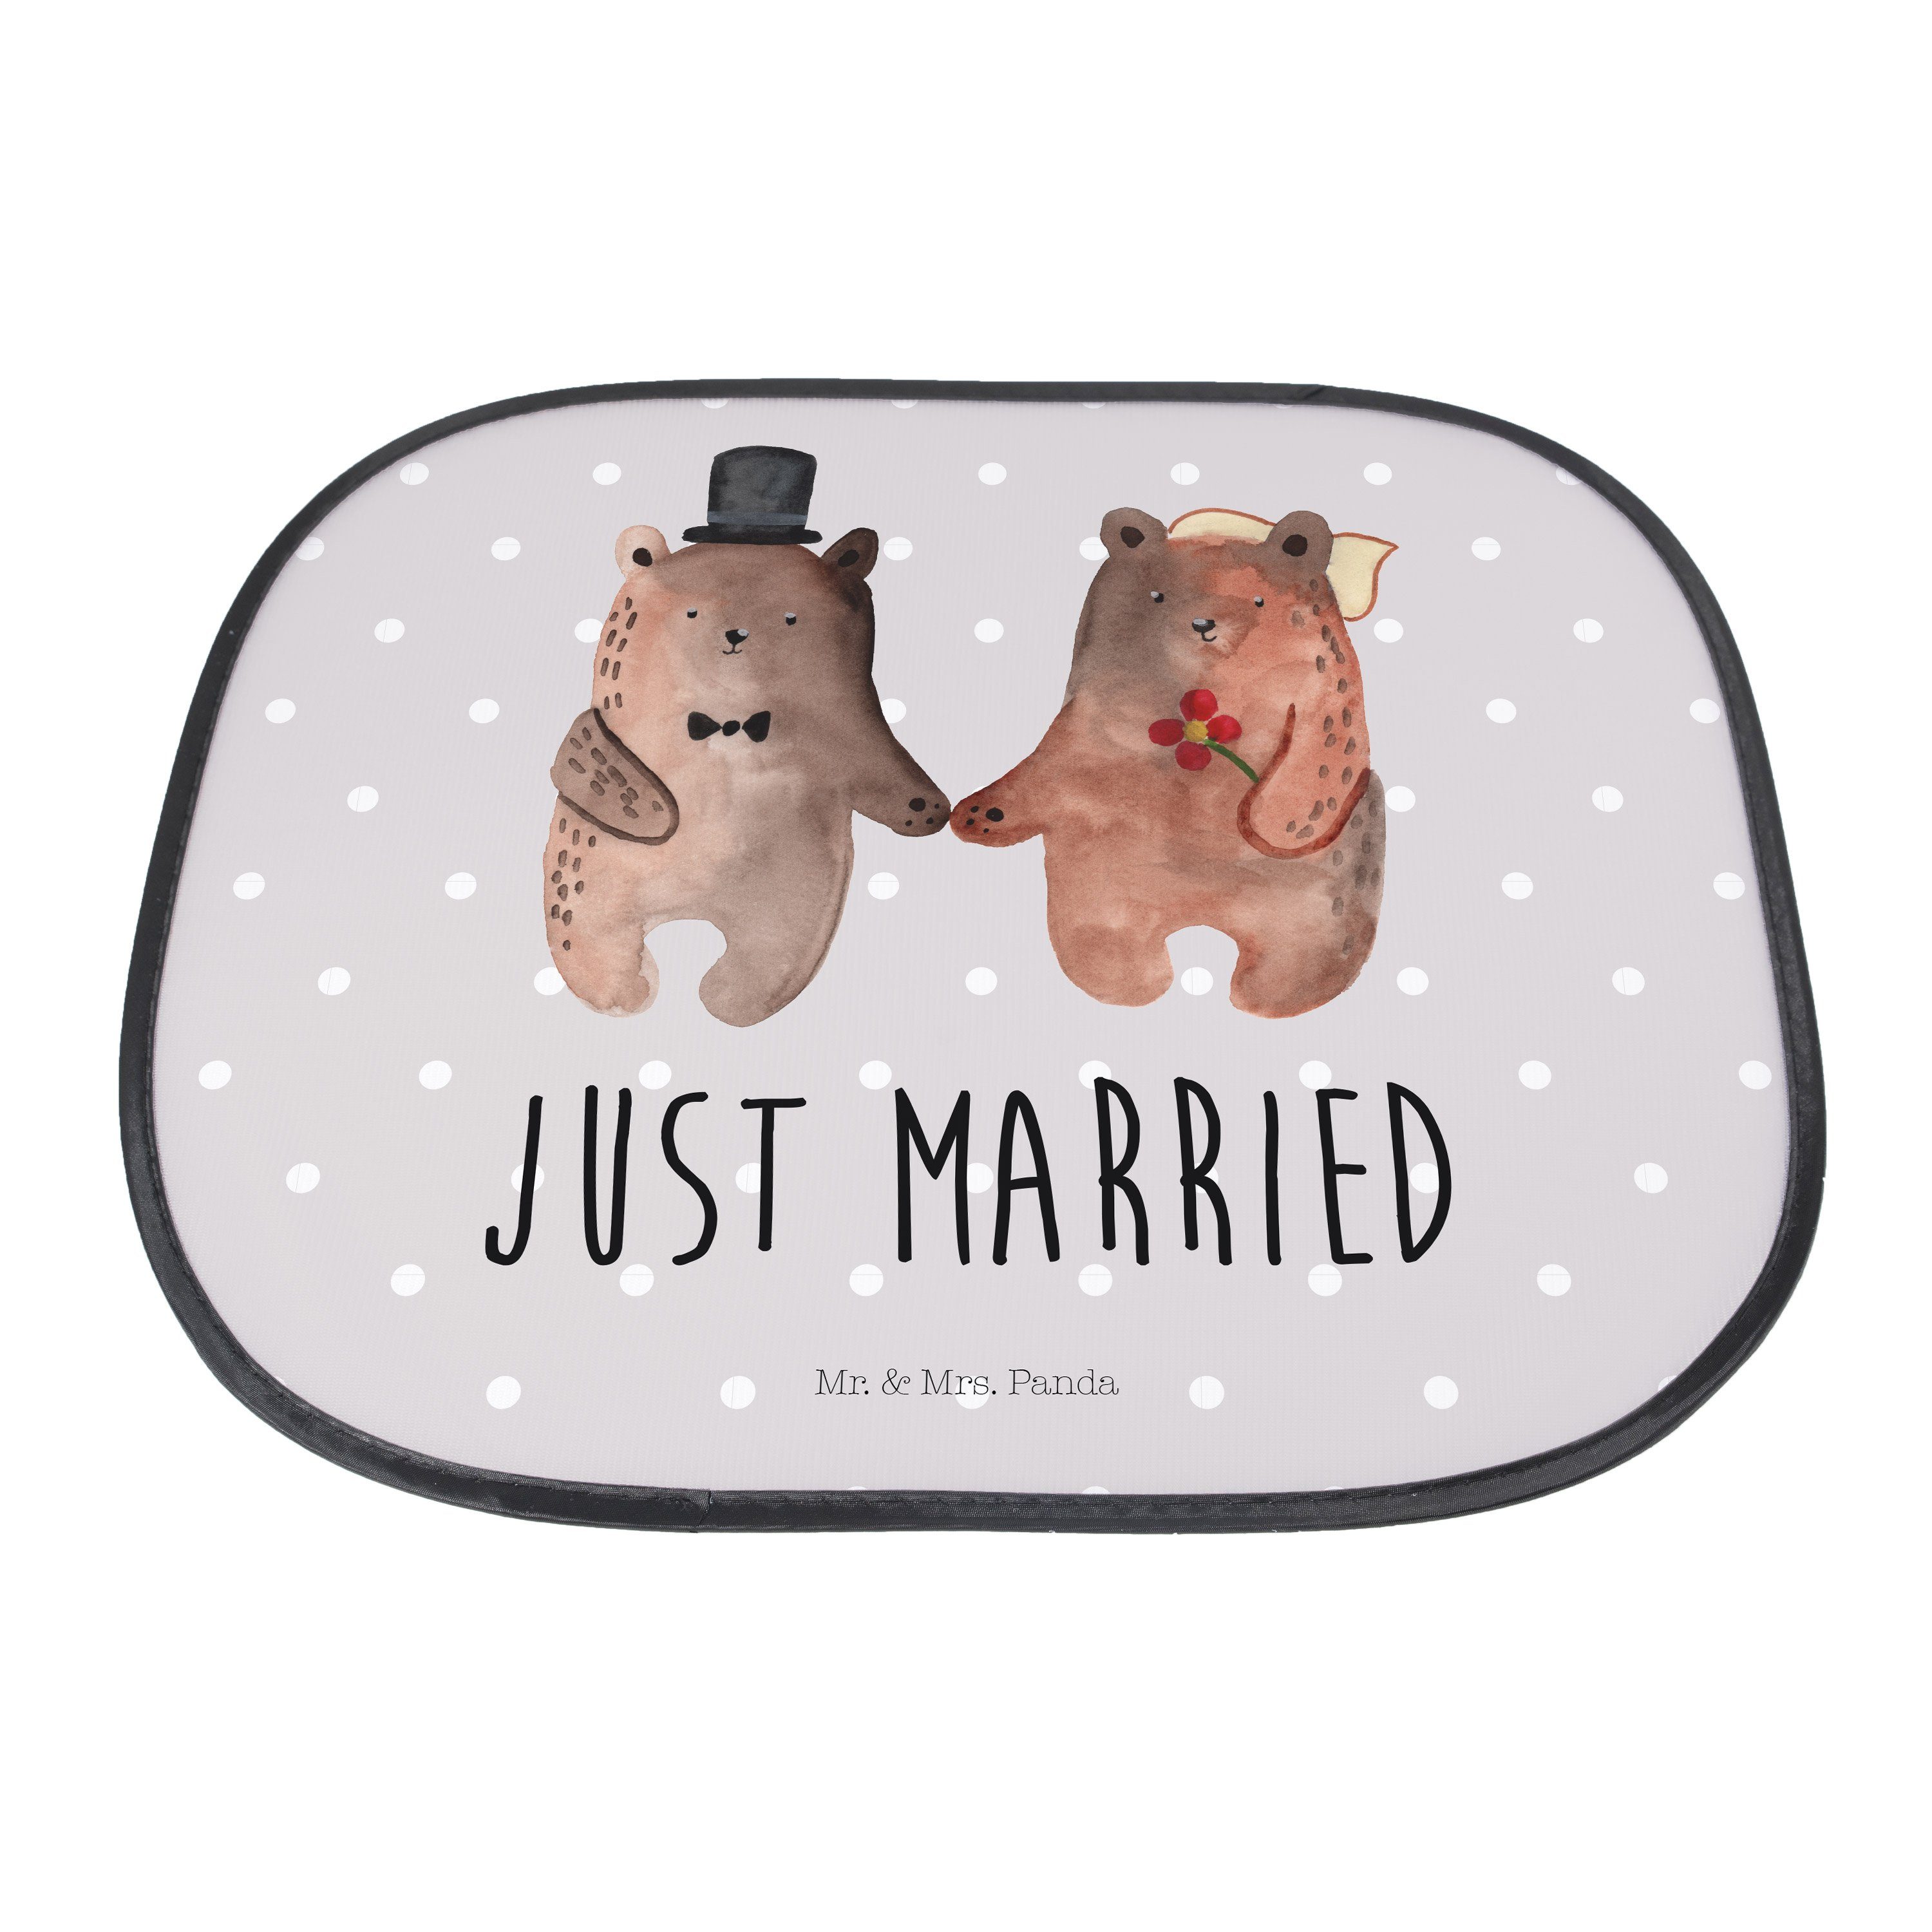 Seidenmatt Mrs. - Heirat Panda, Sonne - Bä, Teddy, Auto, Geschenk, Mr. Pastell Teddybär, Grau & Sonnenschutz Bär